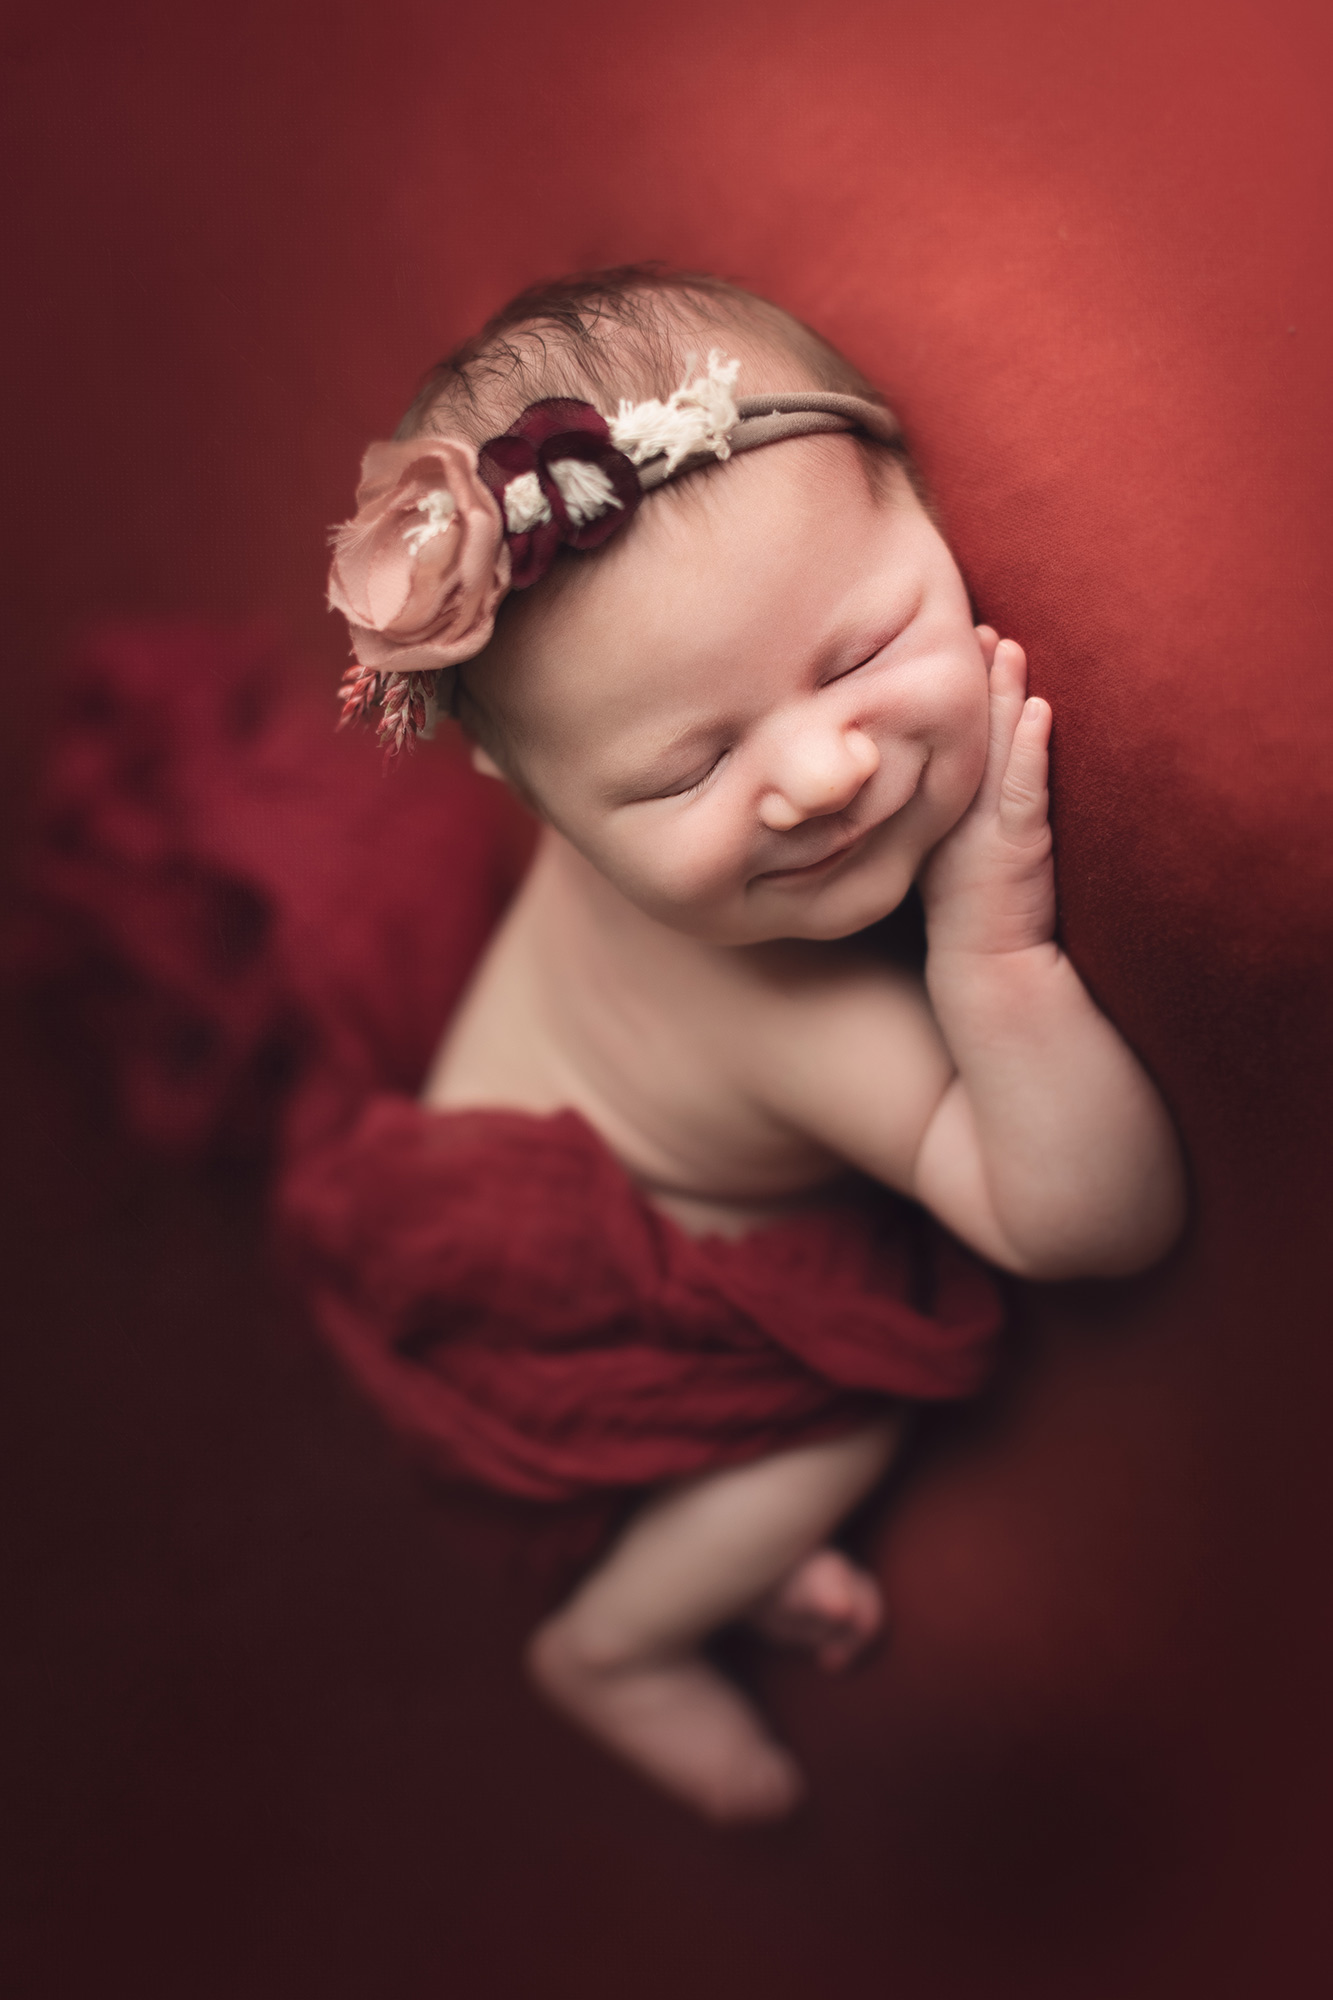 newborn photography - baby girl - red setup